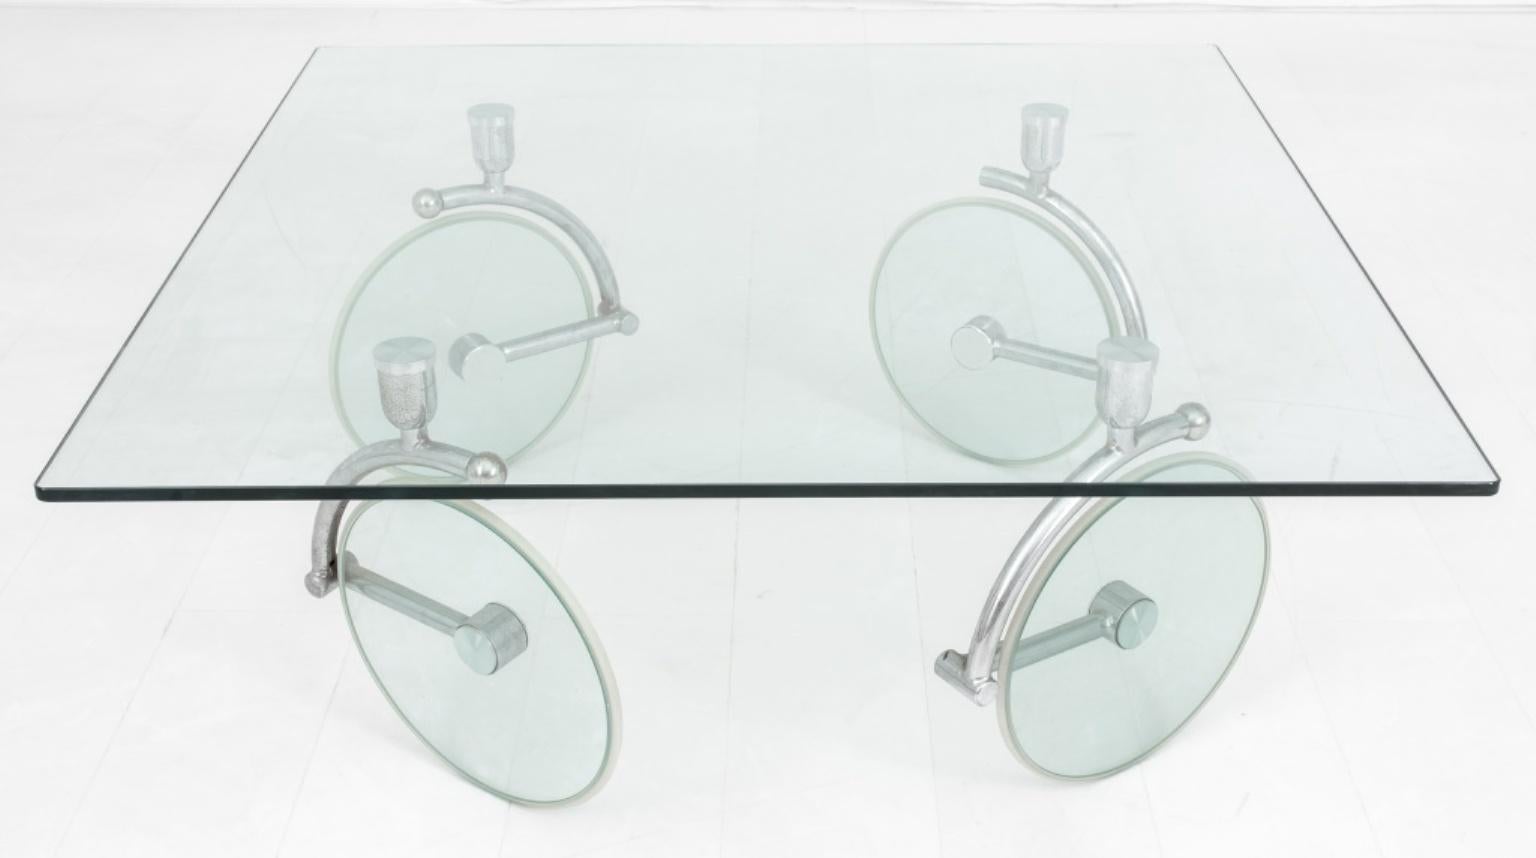 Gae Aulenti (Italian, 1927 - 2012) for Fontana Arte Postmodern design 'Bicycle Tour' coffee table, square glass top on four metal mount wheels, circa 1980.

Dimensions: 18